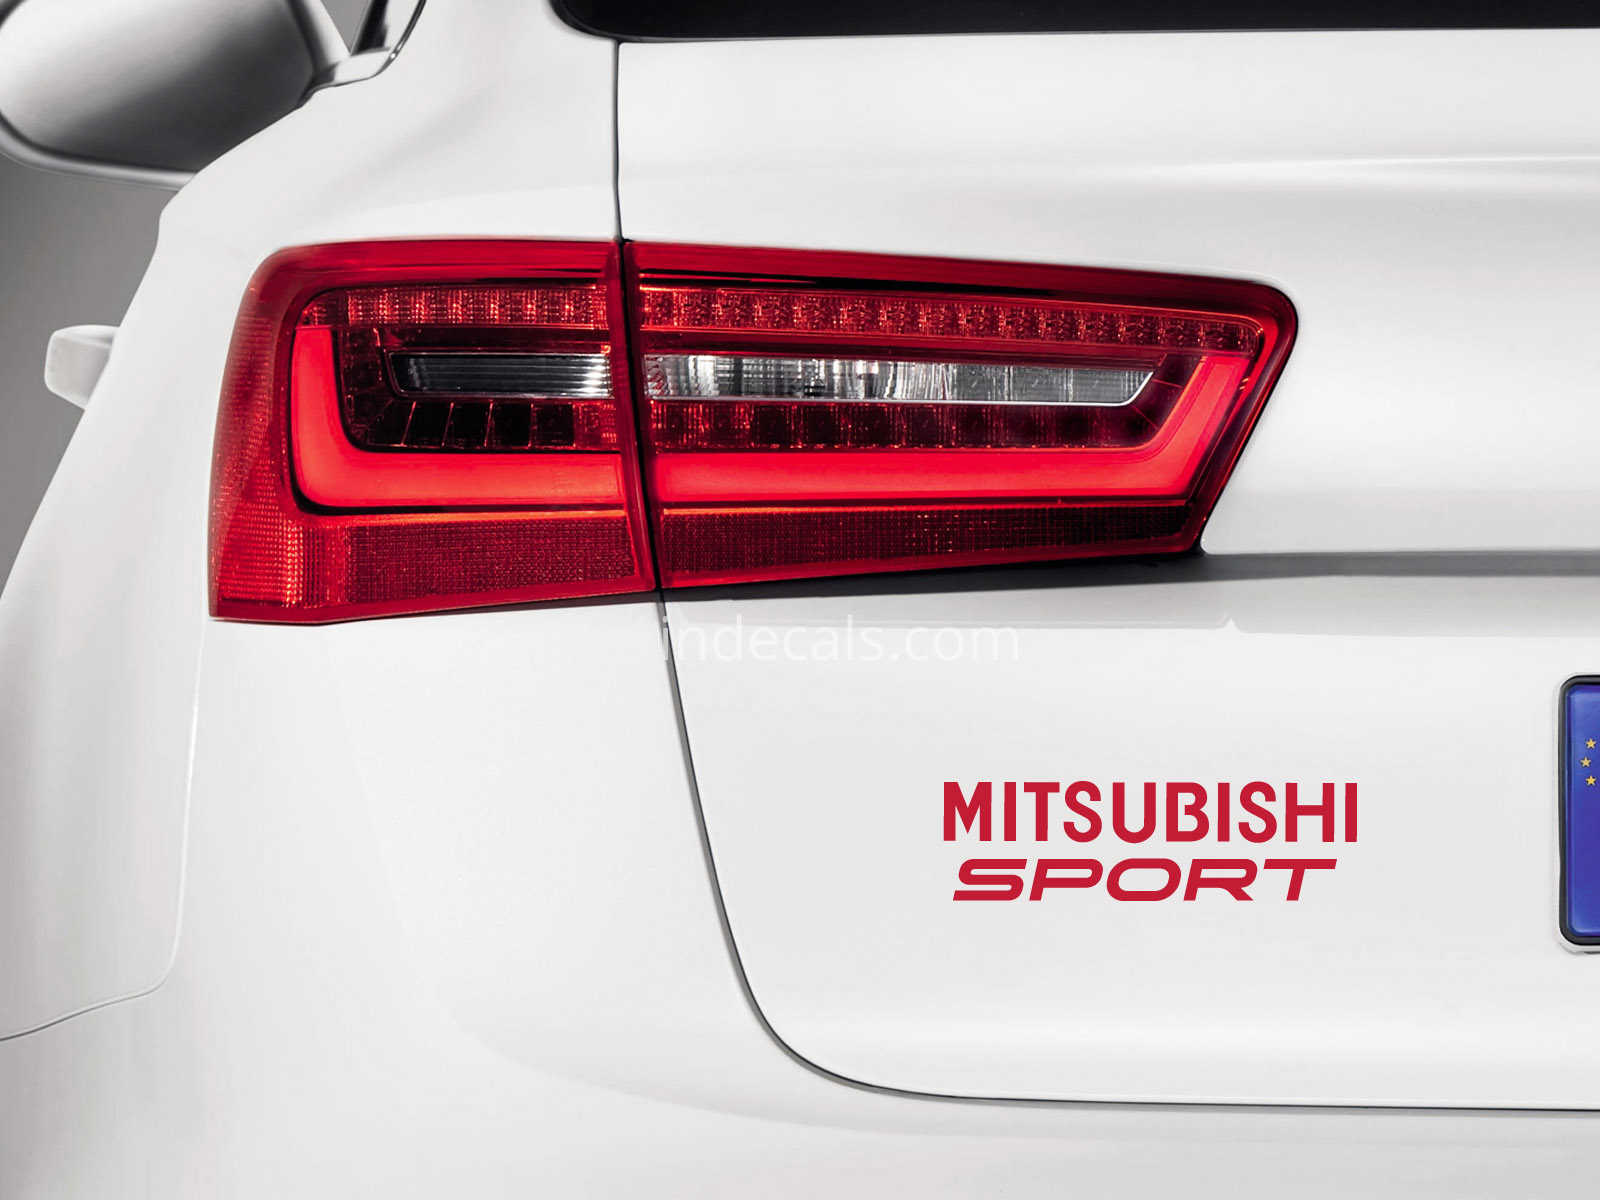 1 x Mitsubishi Sports Sticker for Trunk - Red